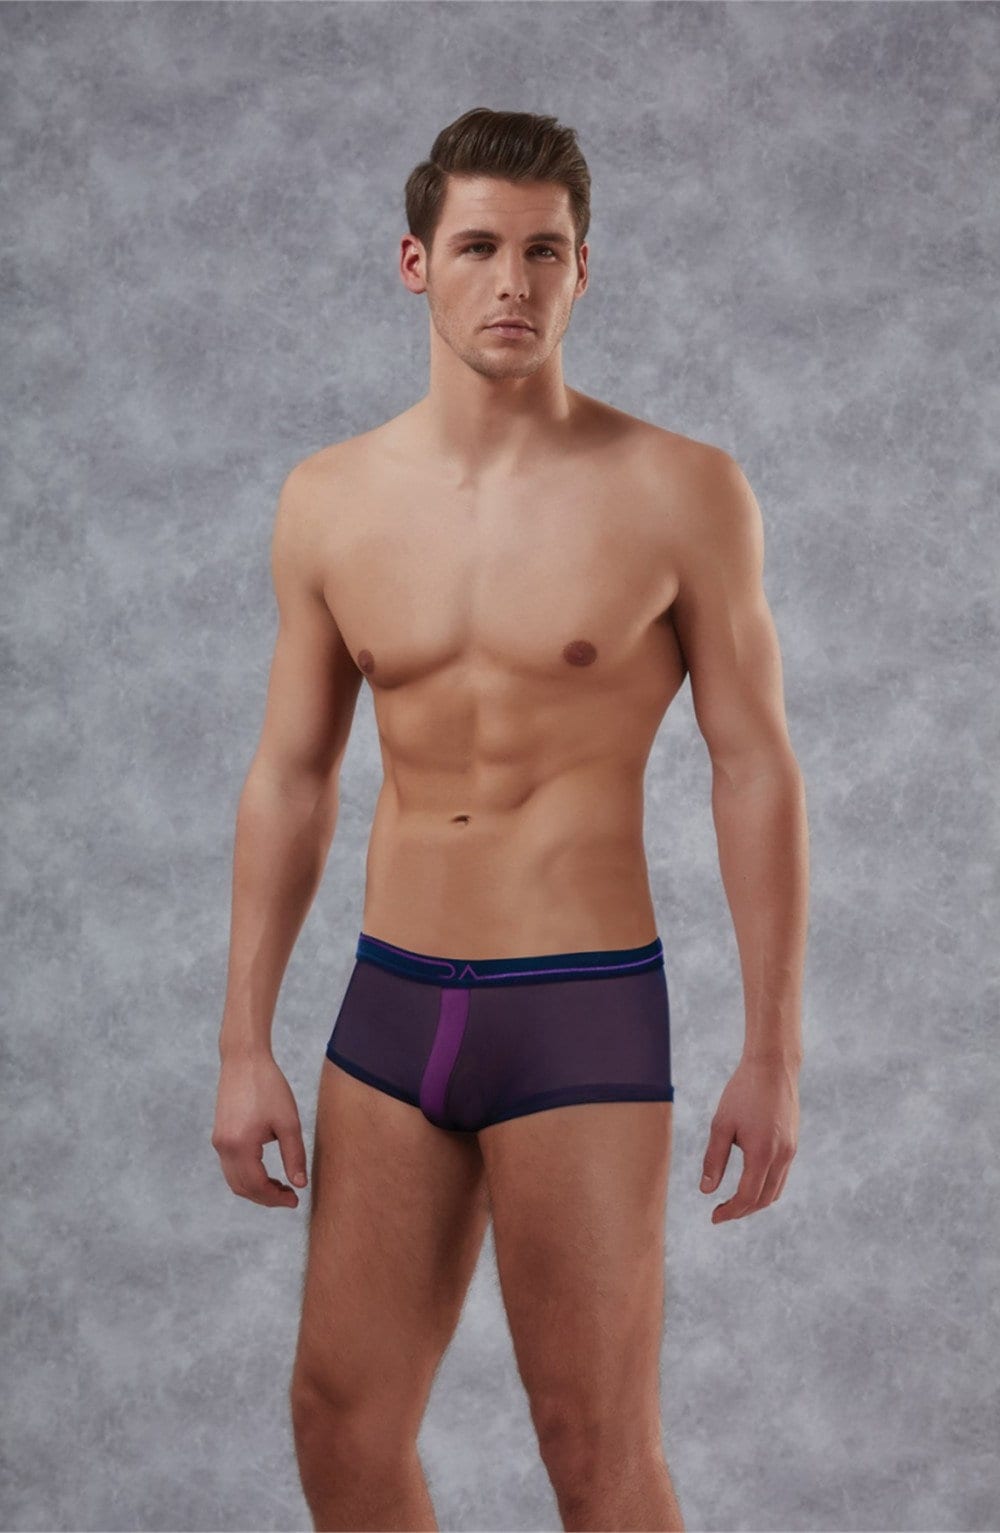 Affordable Wholesale transparent men pants For Trendsetting Looks -  Alibaba.com